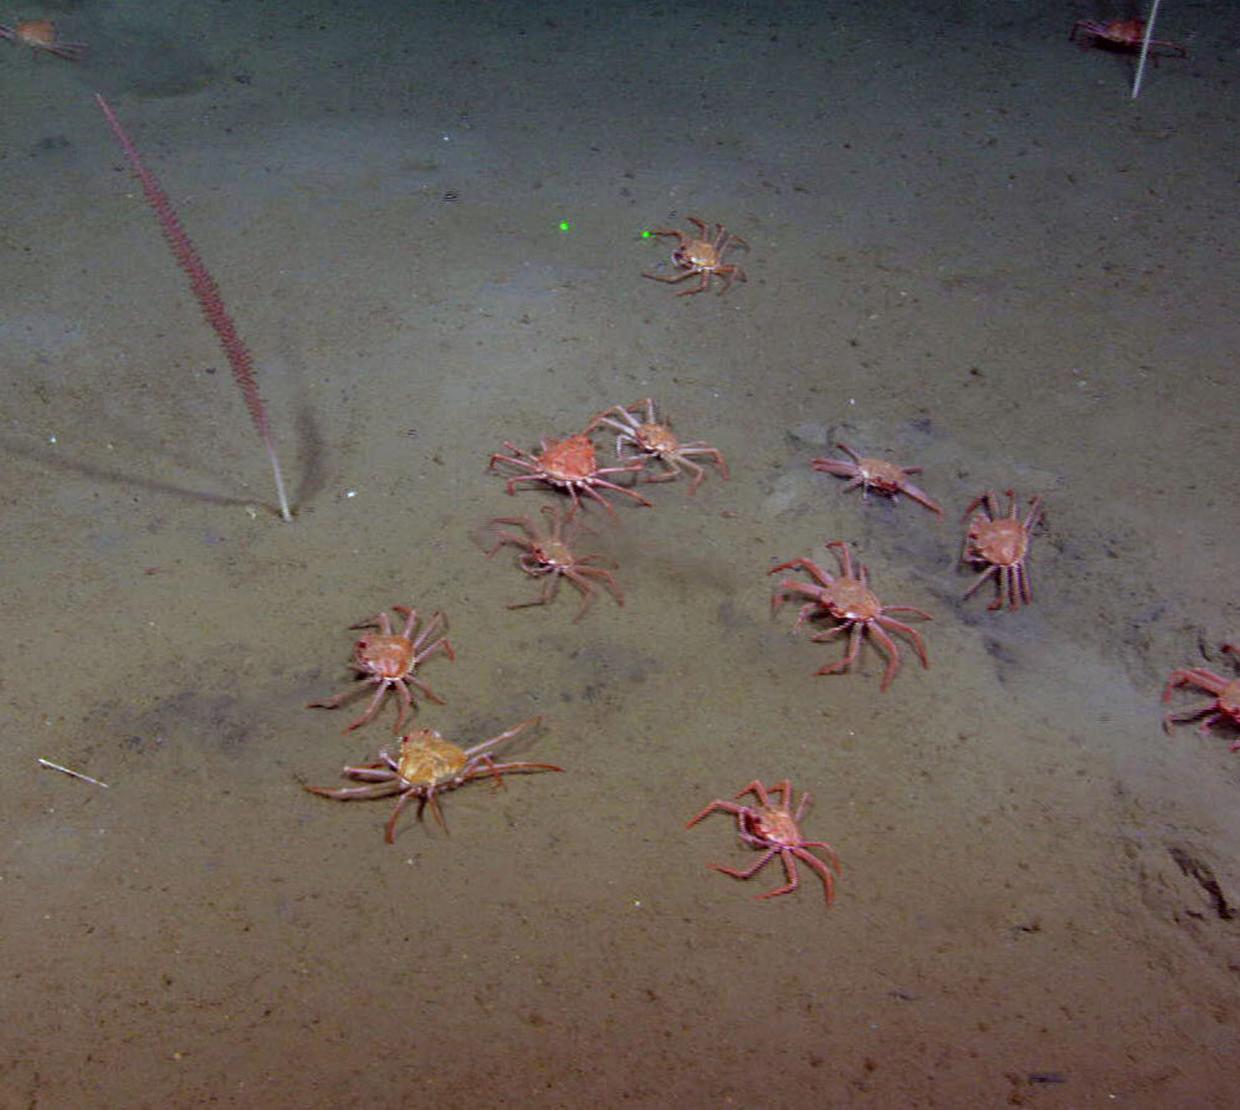 Group of Tanner crabs sitting on ocean floor